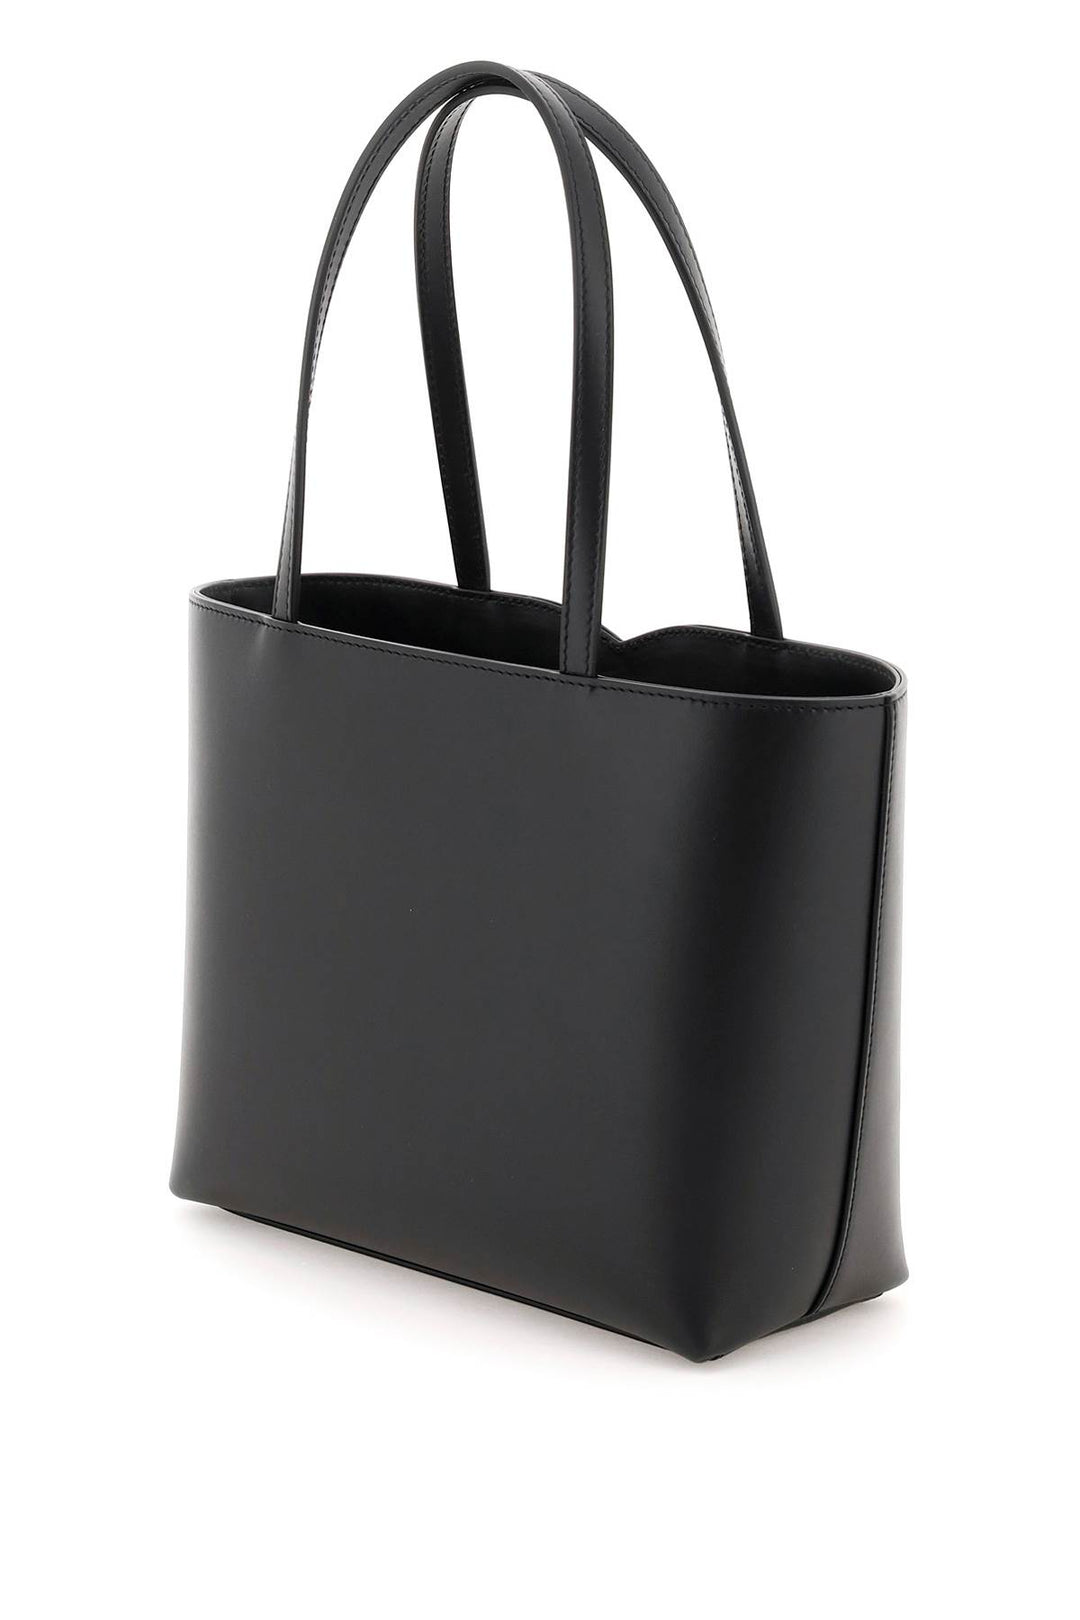 Dolce & Gabbana Dg Logo Small Tote Bag   Black